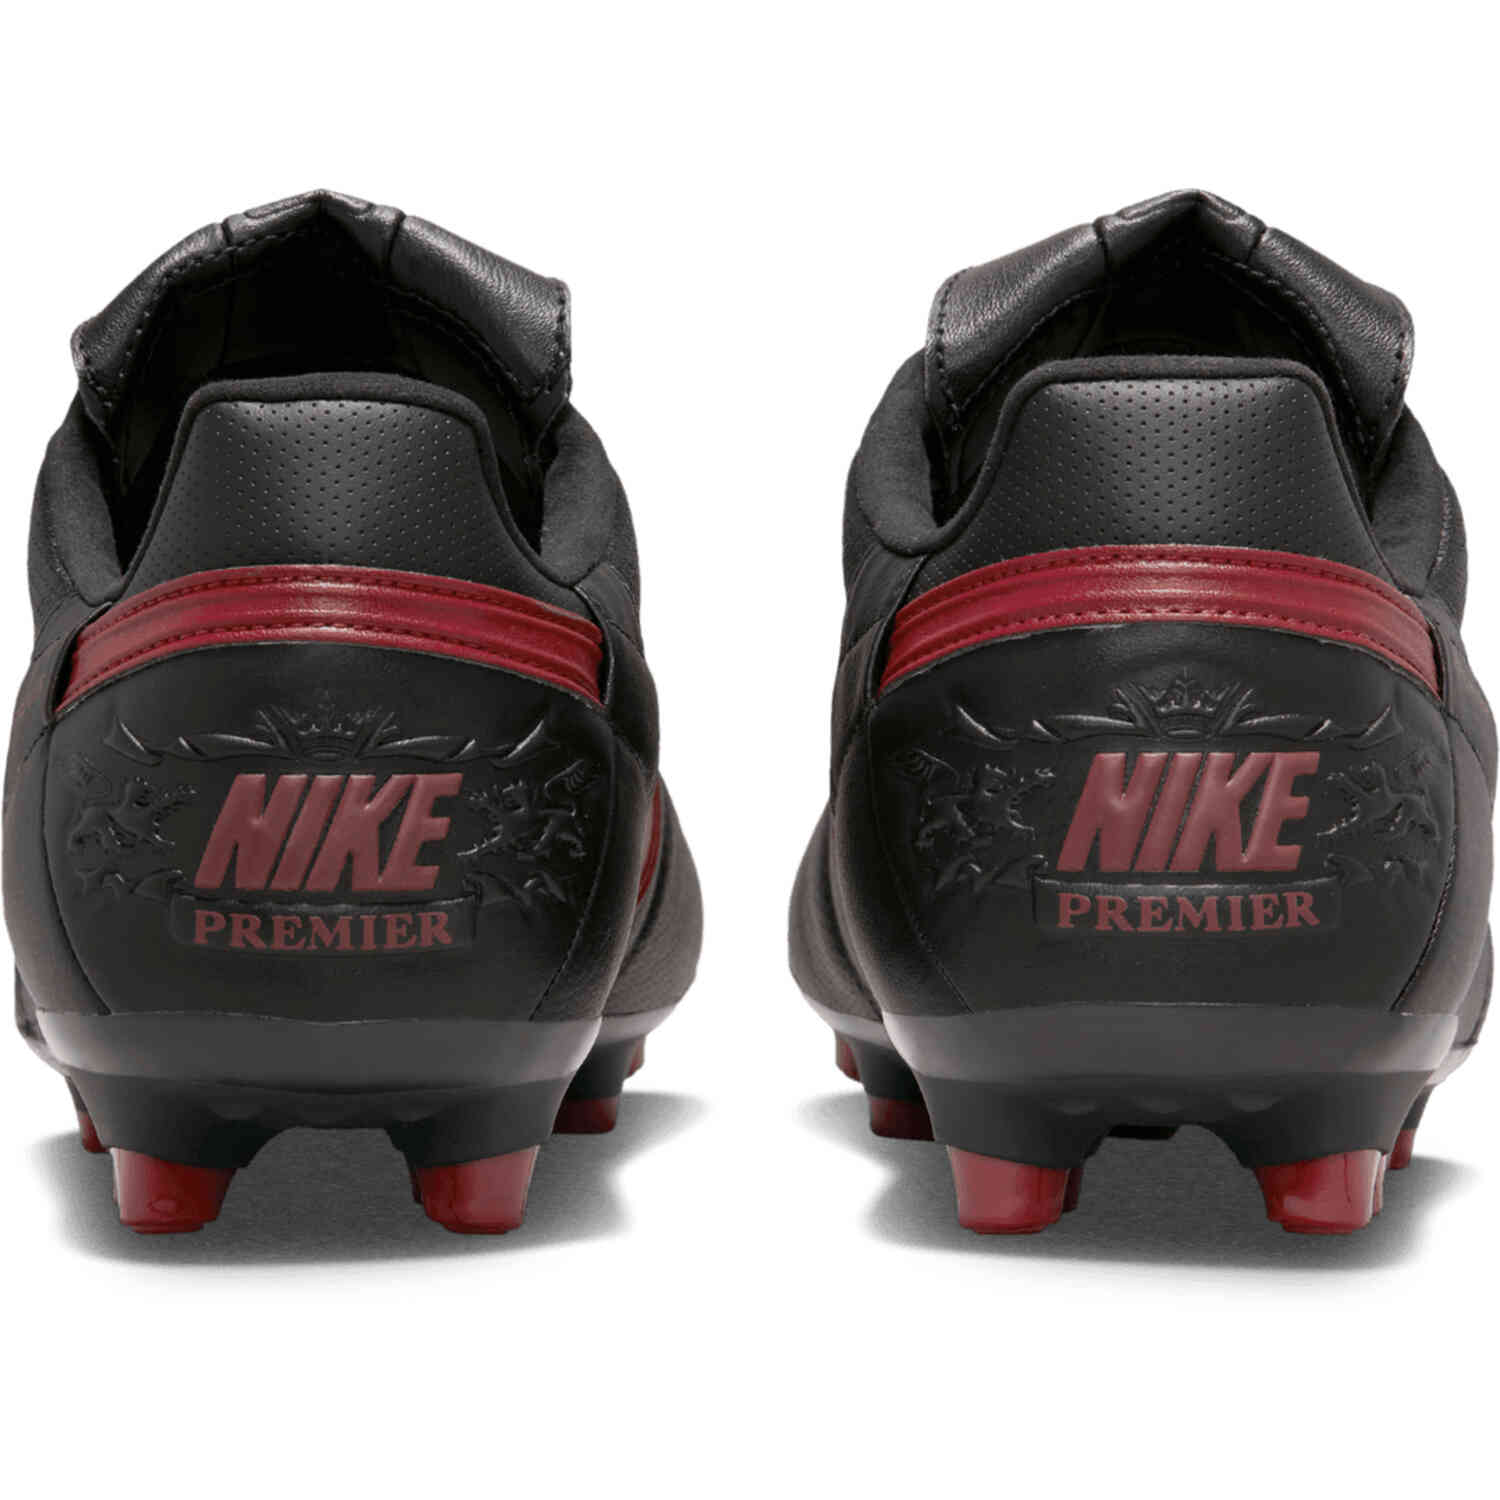 Nike Premier III FG – Black & Team Red with Black